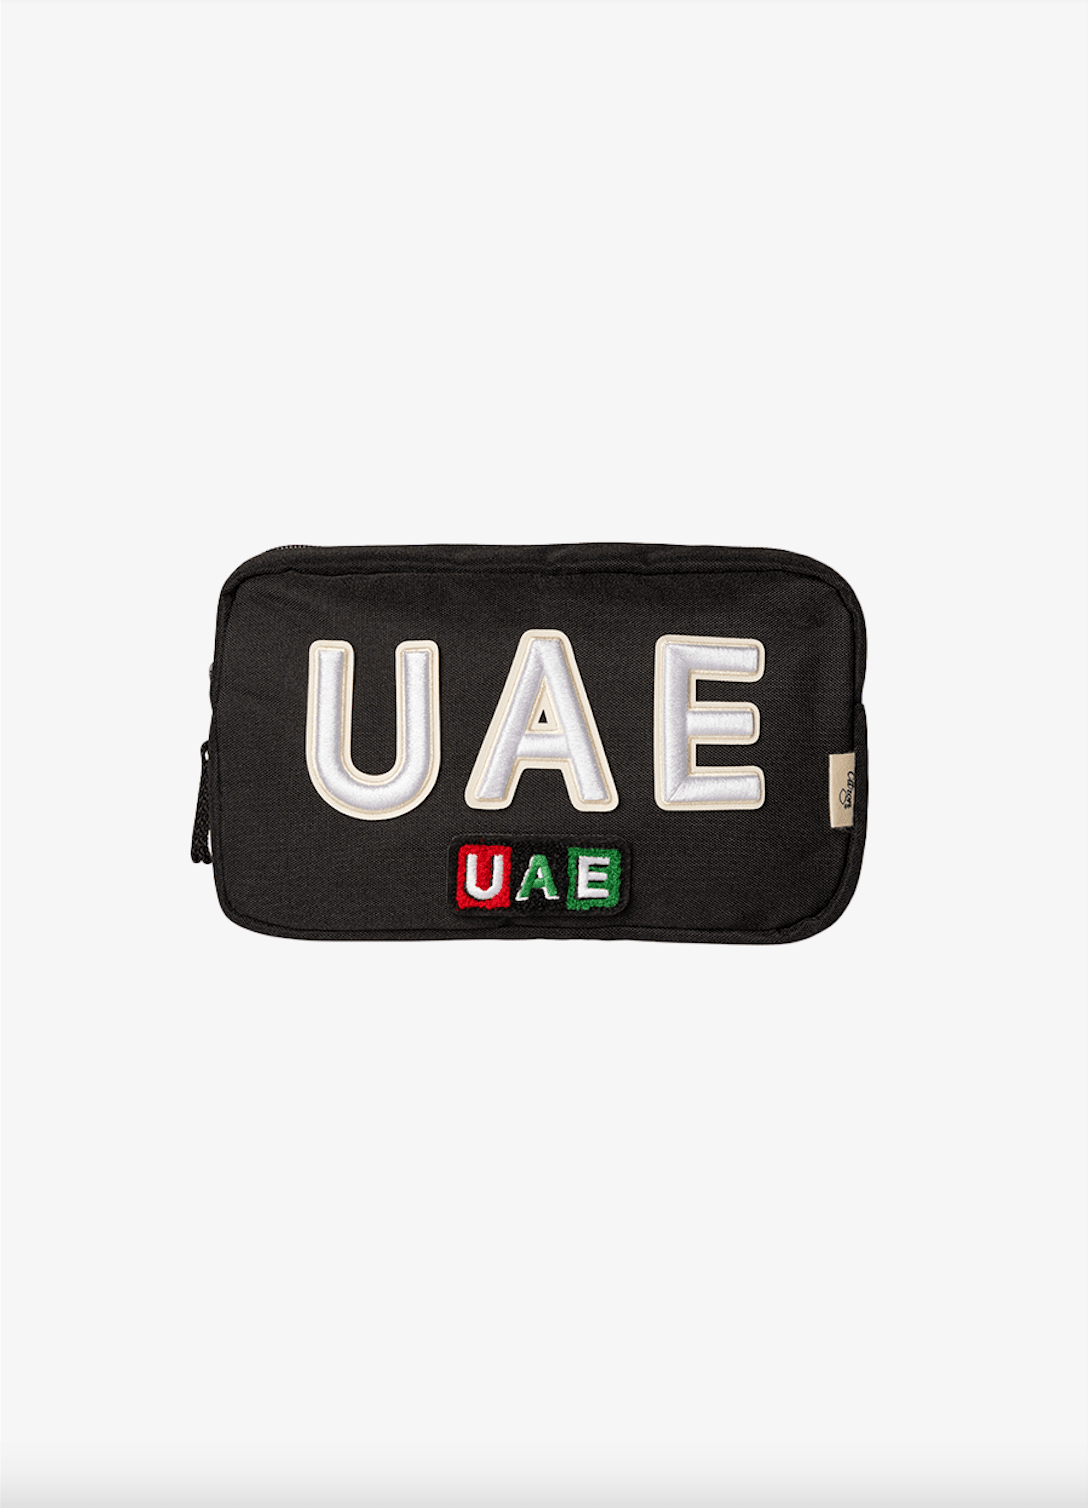 UAE Flag Classic Pouch